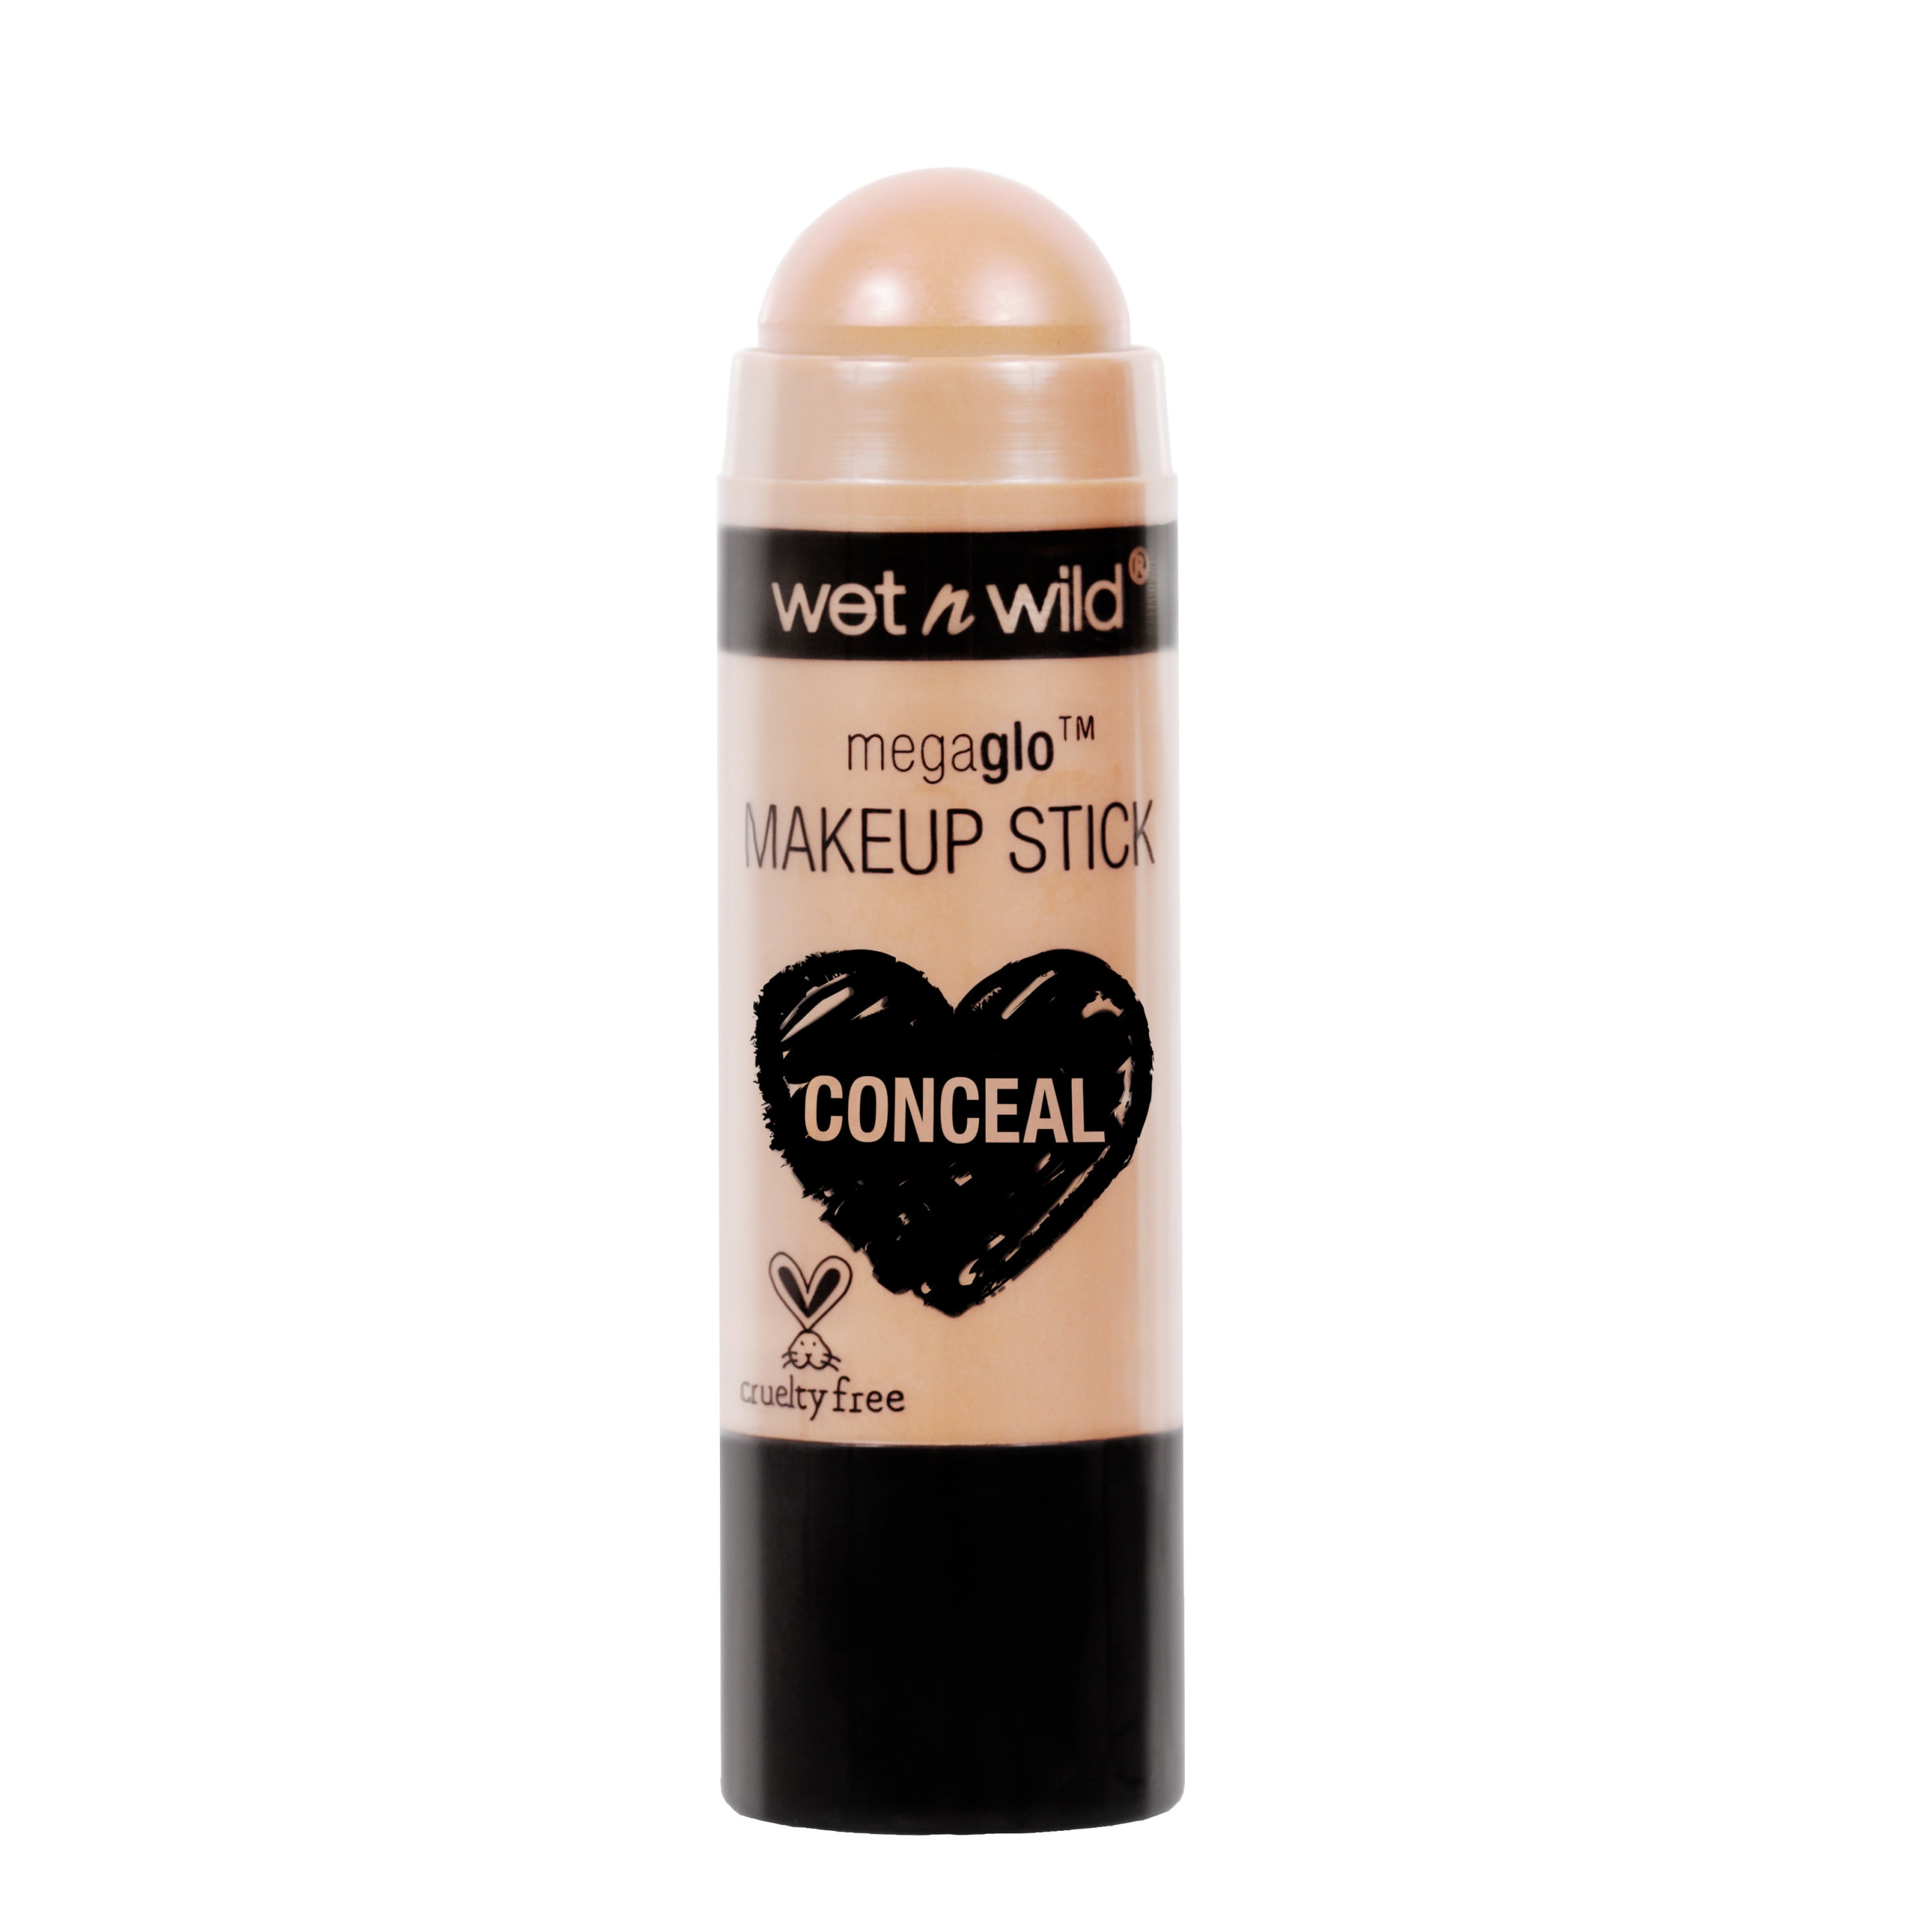 wet n wild MegaGlo Concealer Makeup Stick, Conceal, Follow